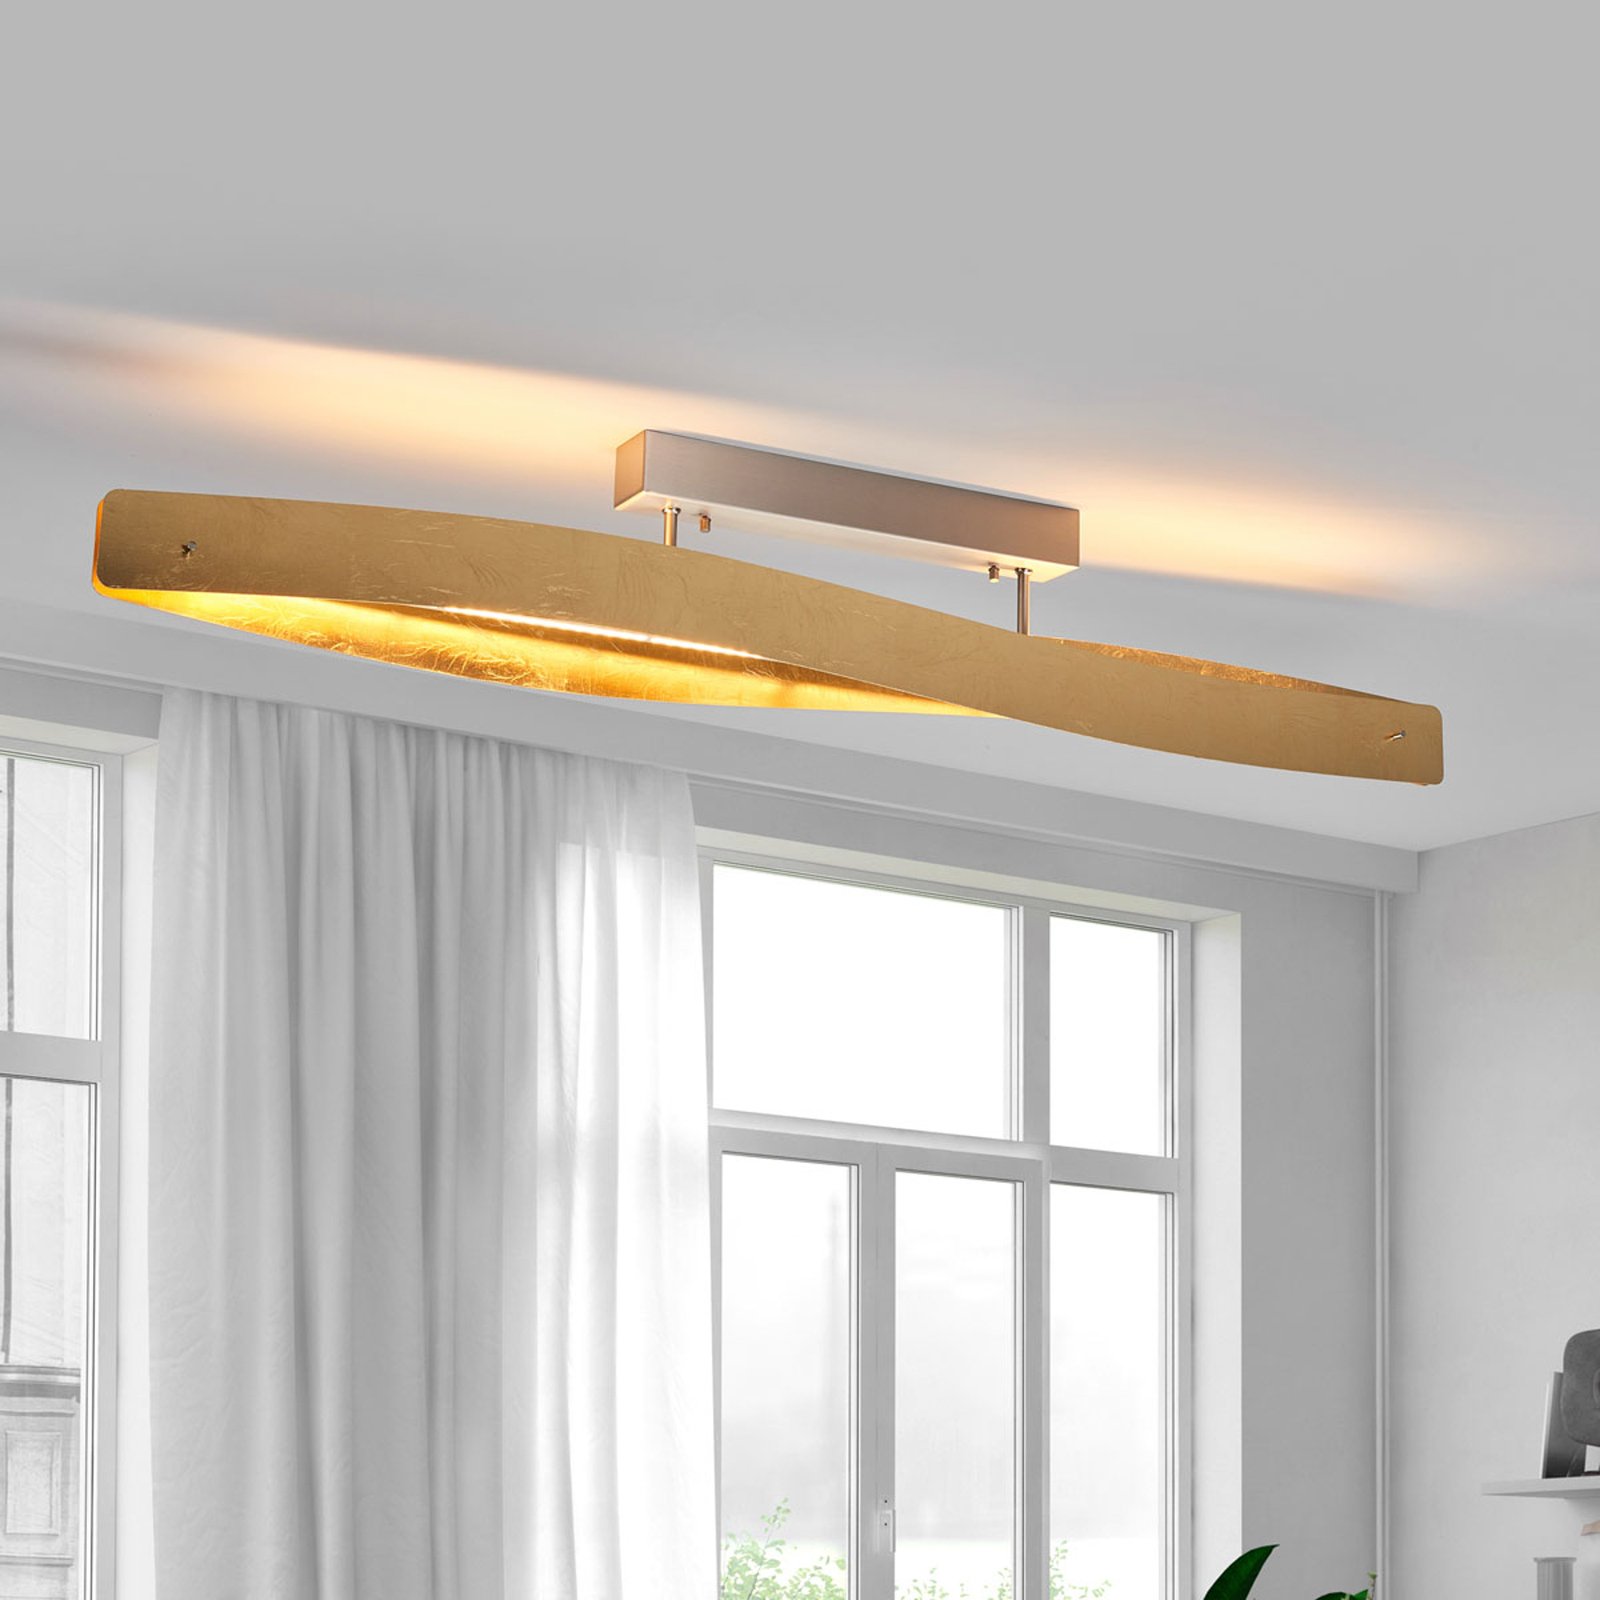 Lampada LED da soffitto finitura dorata a foglia